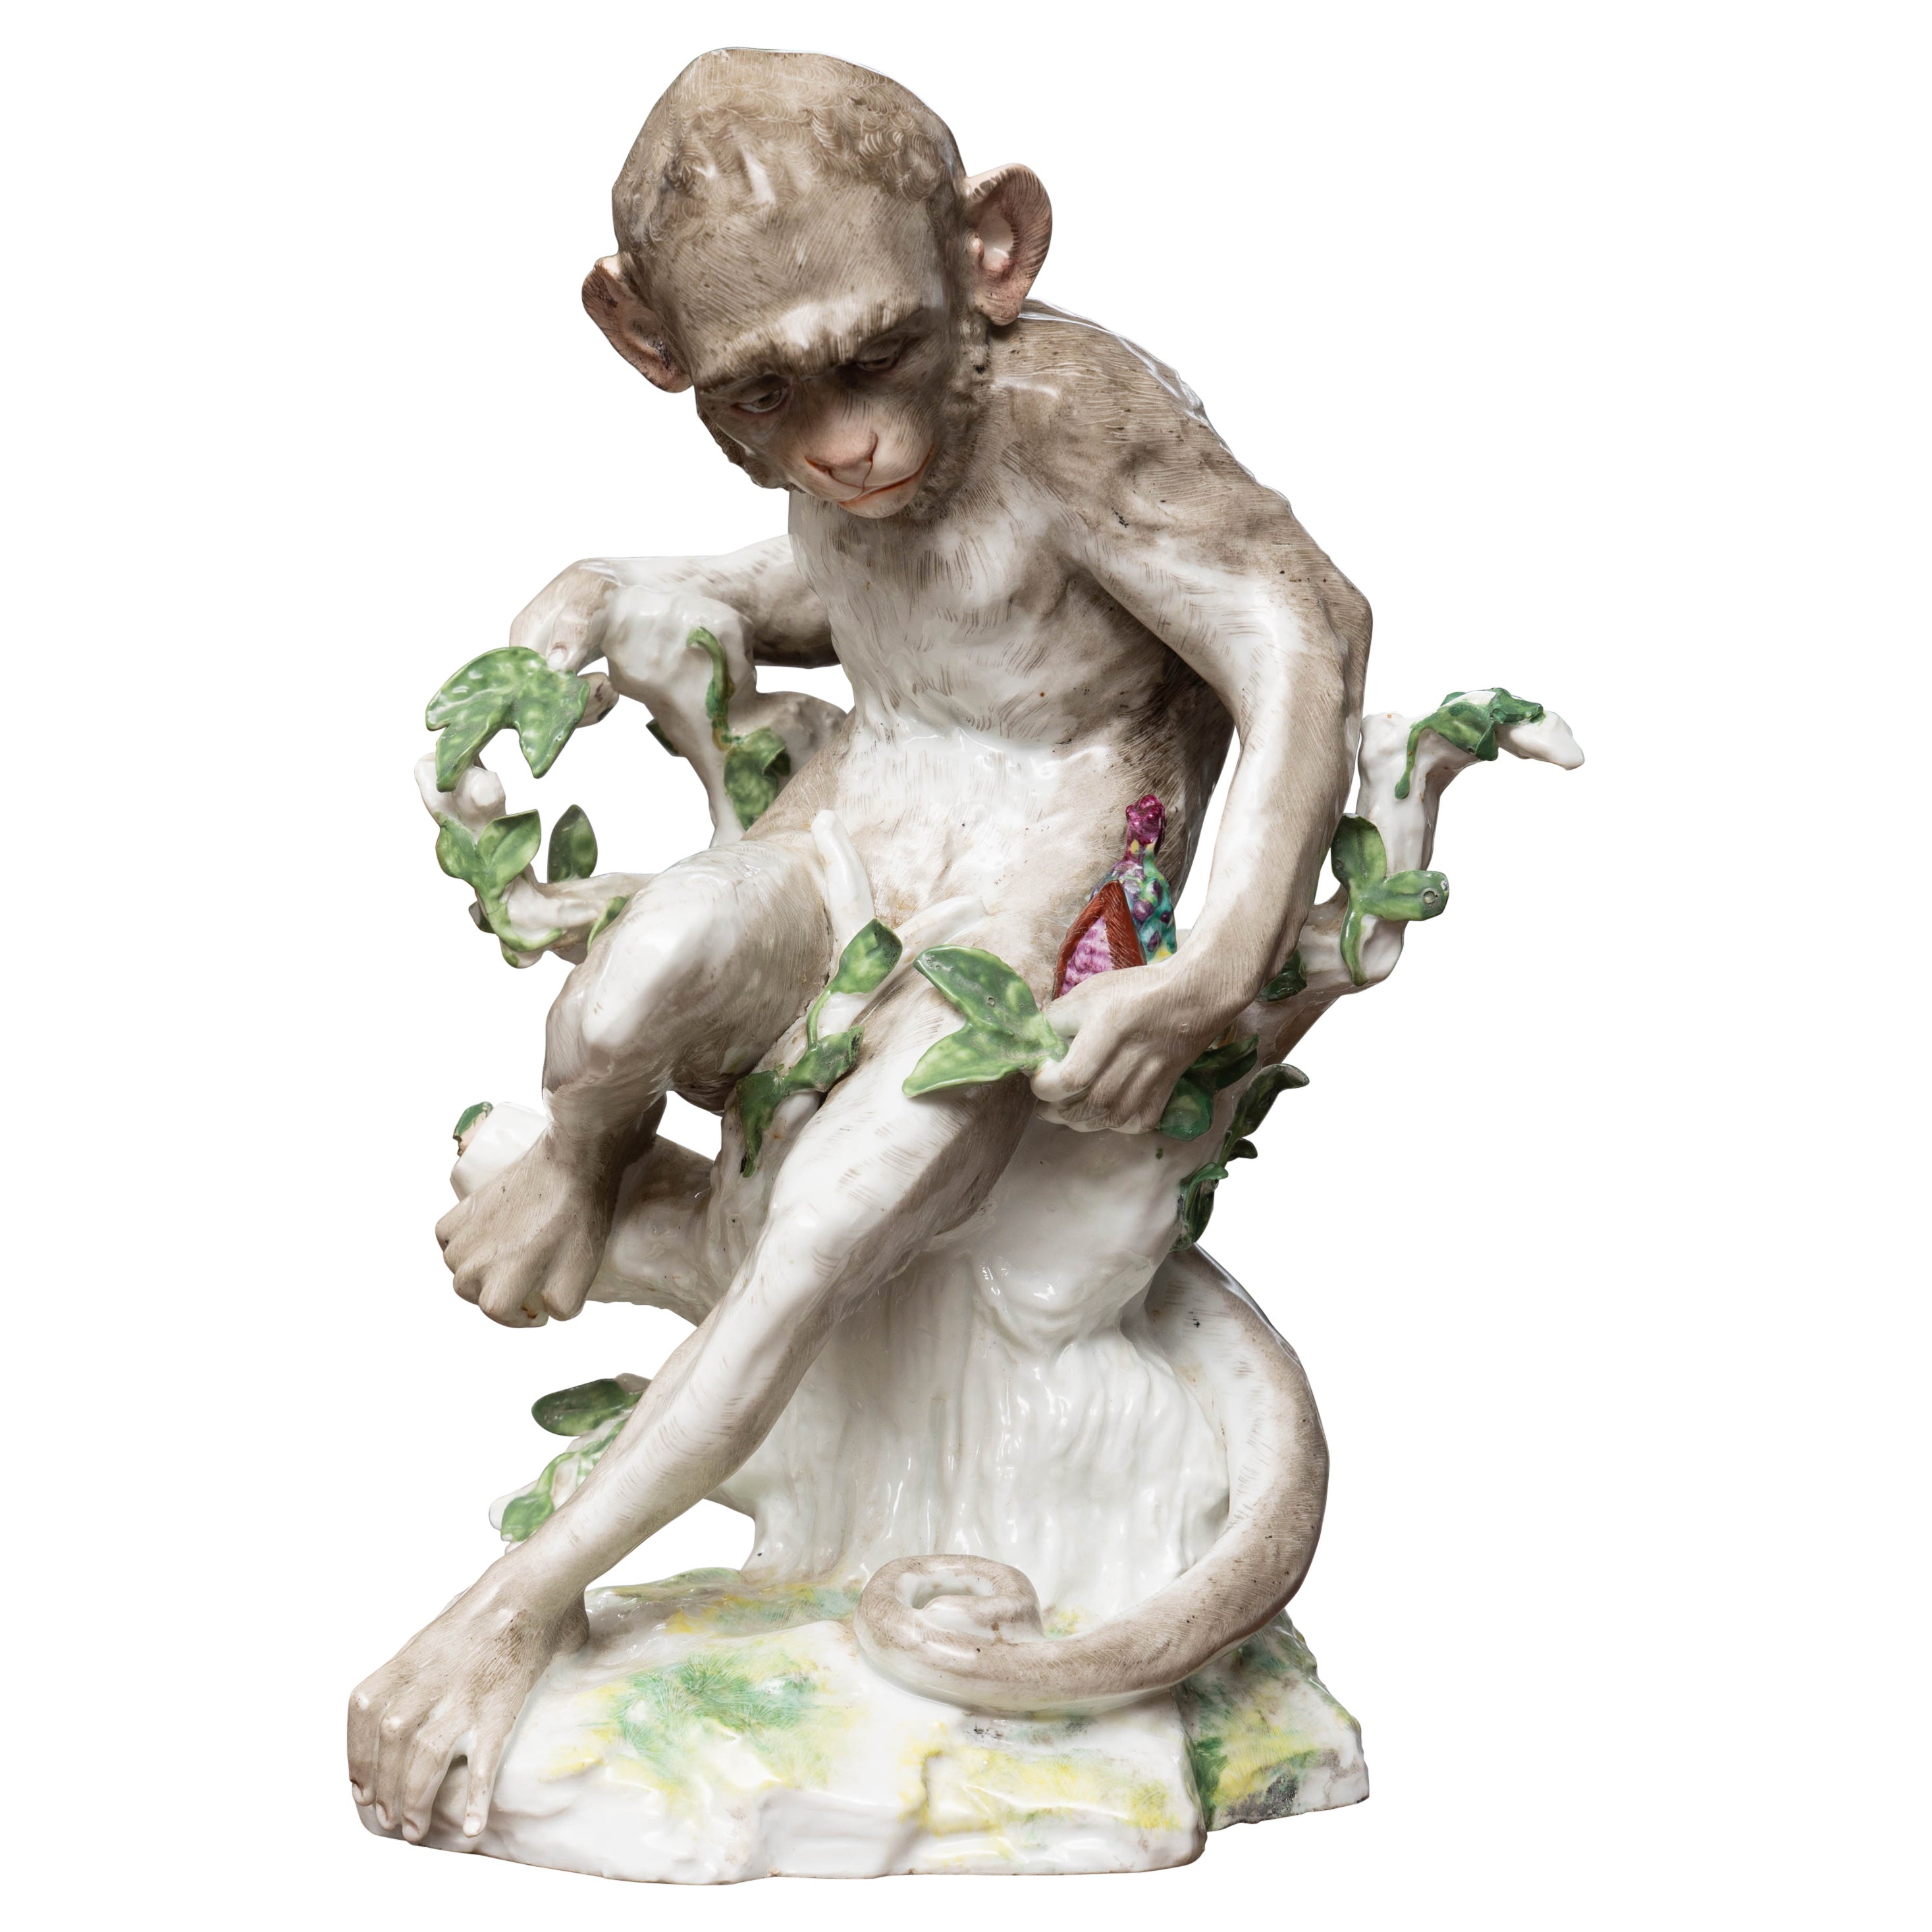 19th Century Edmé Samson Polychromed Porcelain Figure of a Monkey.